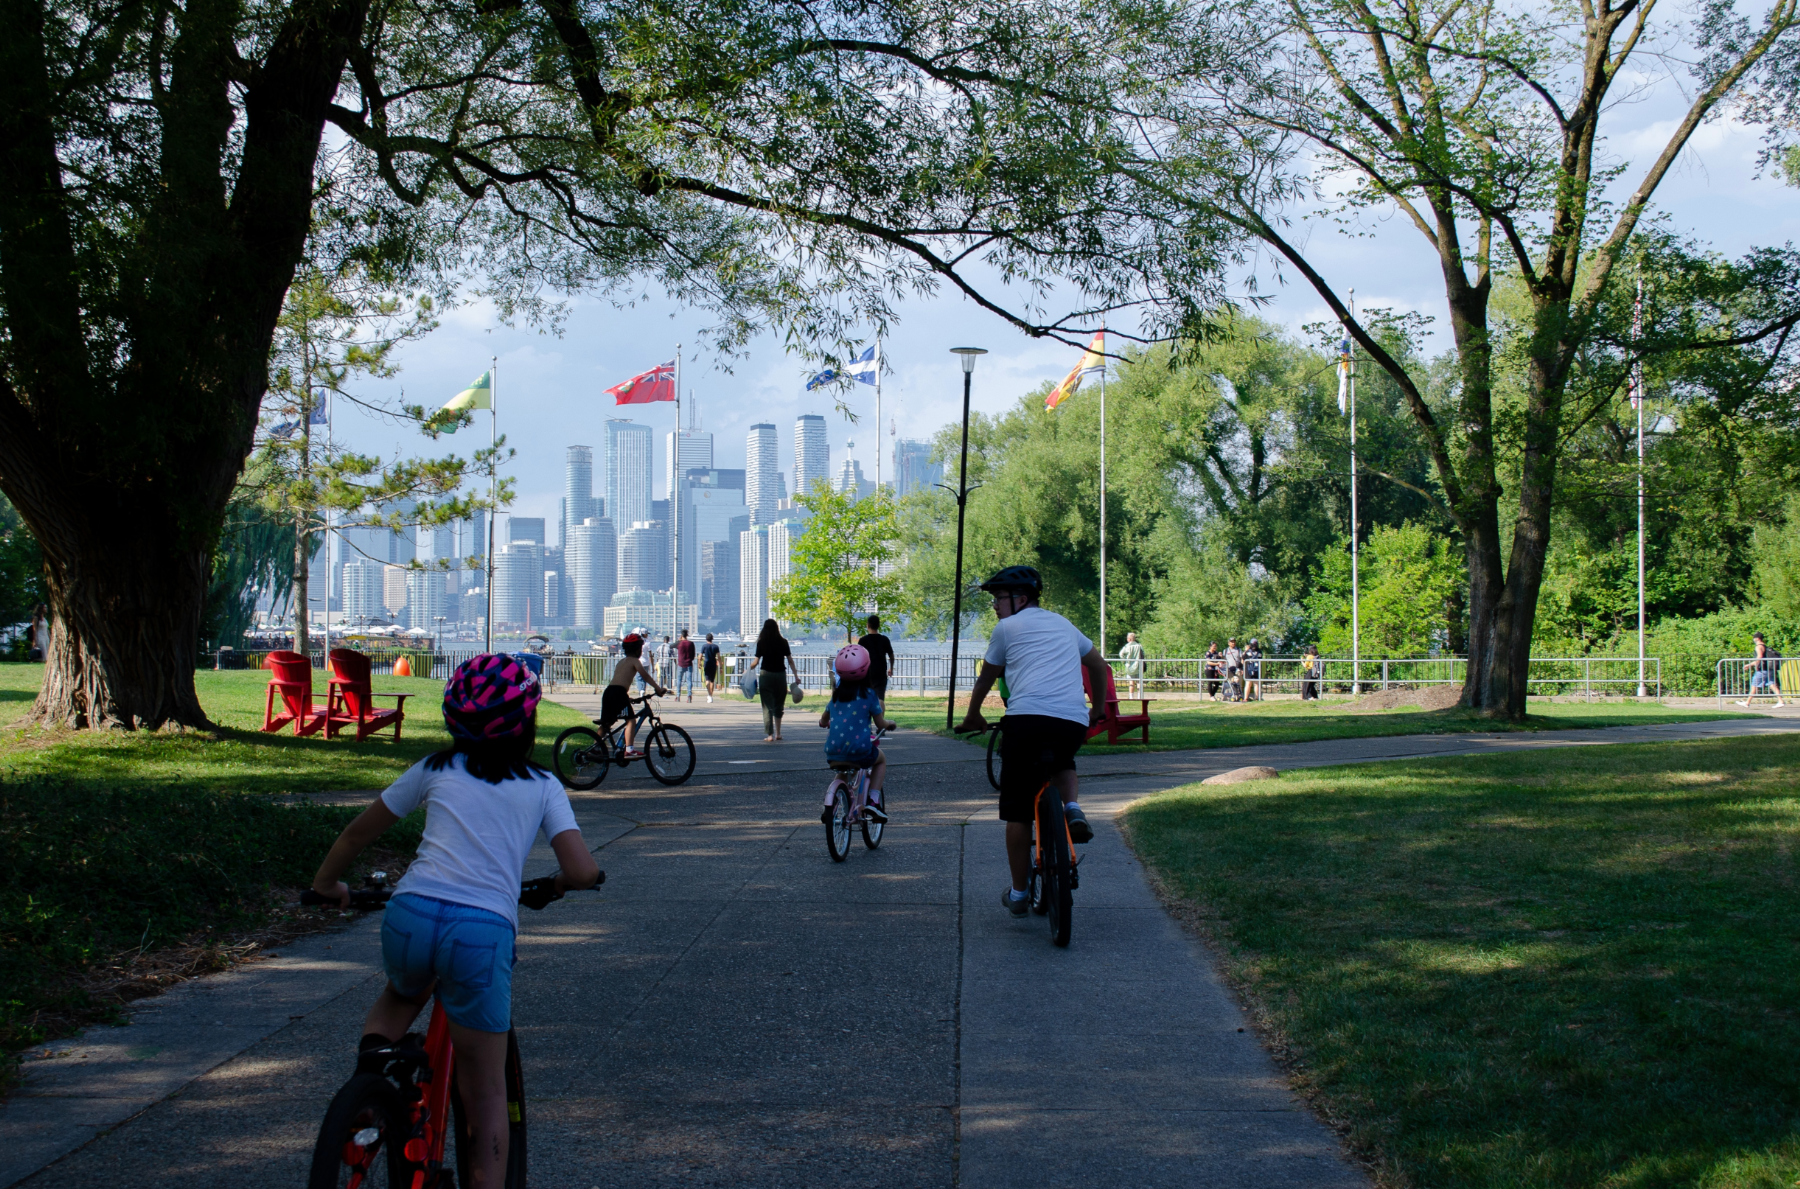 Family riding bicycles through a park.